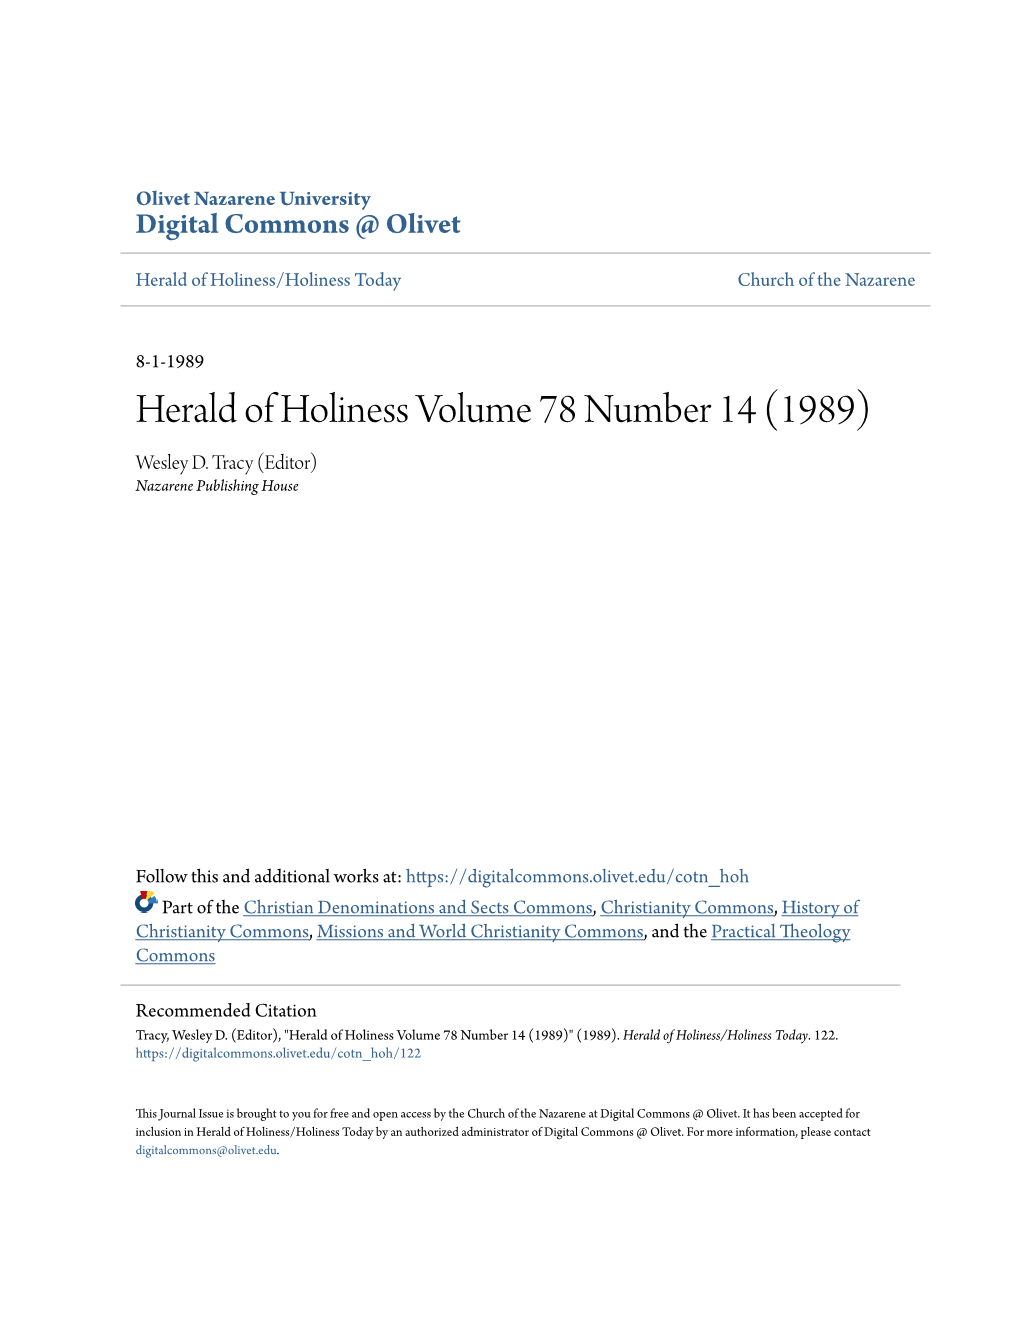 Herald of Holiness Volume 78 Number 14 (1989) Wesley D